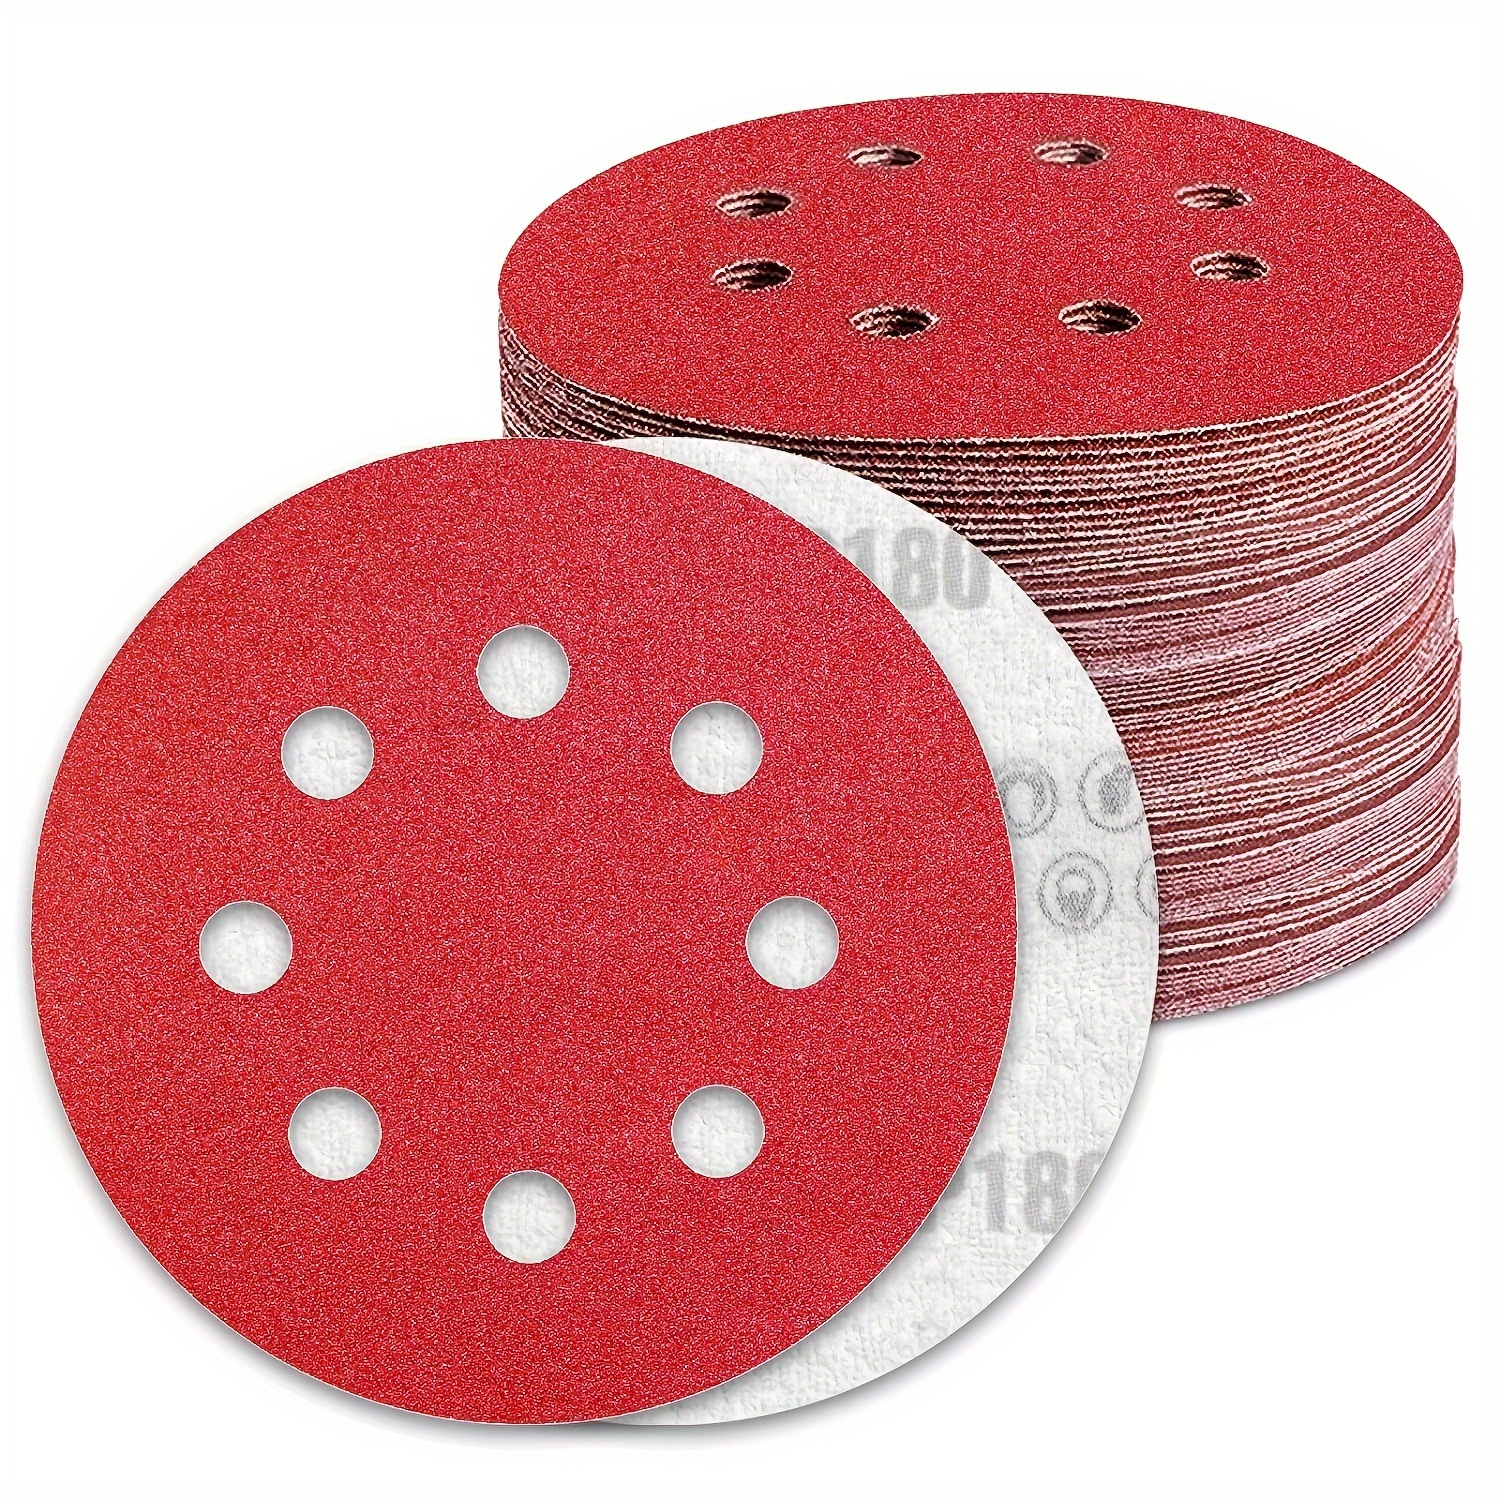 

15pcs 125mm Sanding Discs 40/60/80/100/120/150/180/240/320/400/600/800 Grit For 5 Inch Discs Pads Hook And Loop Orbital Sander